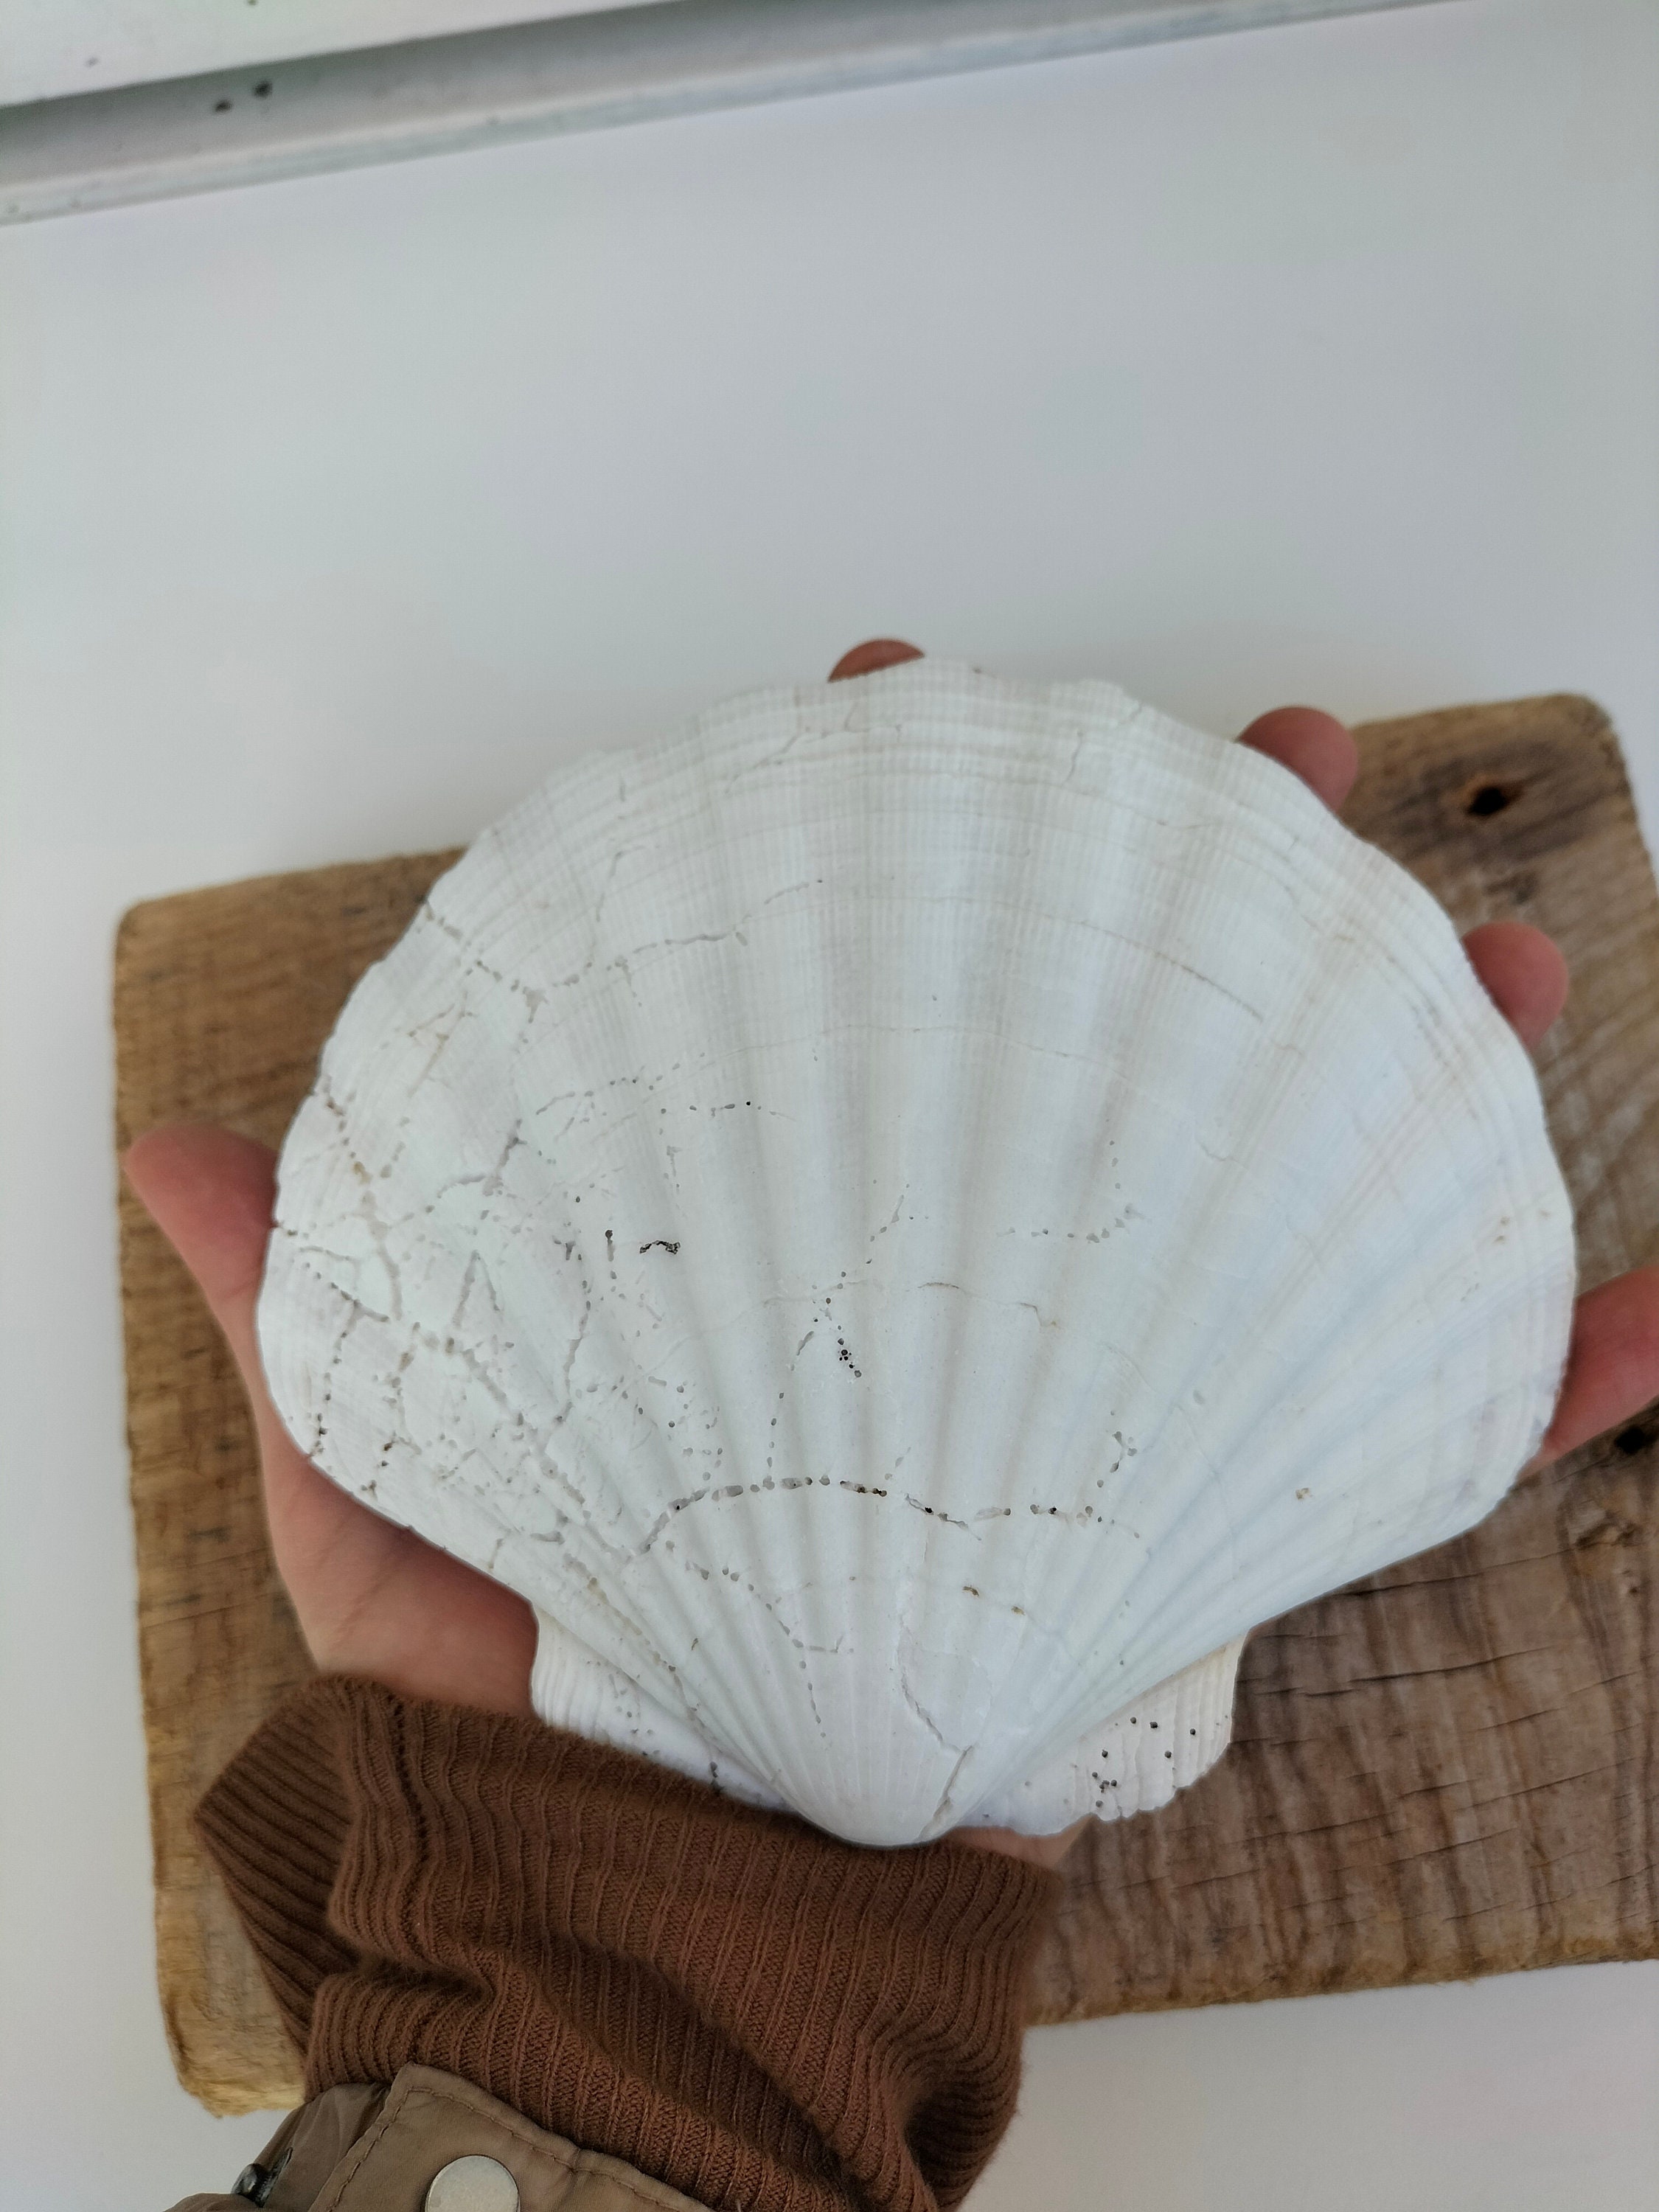 6 Large FLAT Scallop Shells 10-12cm Natural Sea Natural Crafts Serving Dish 